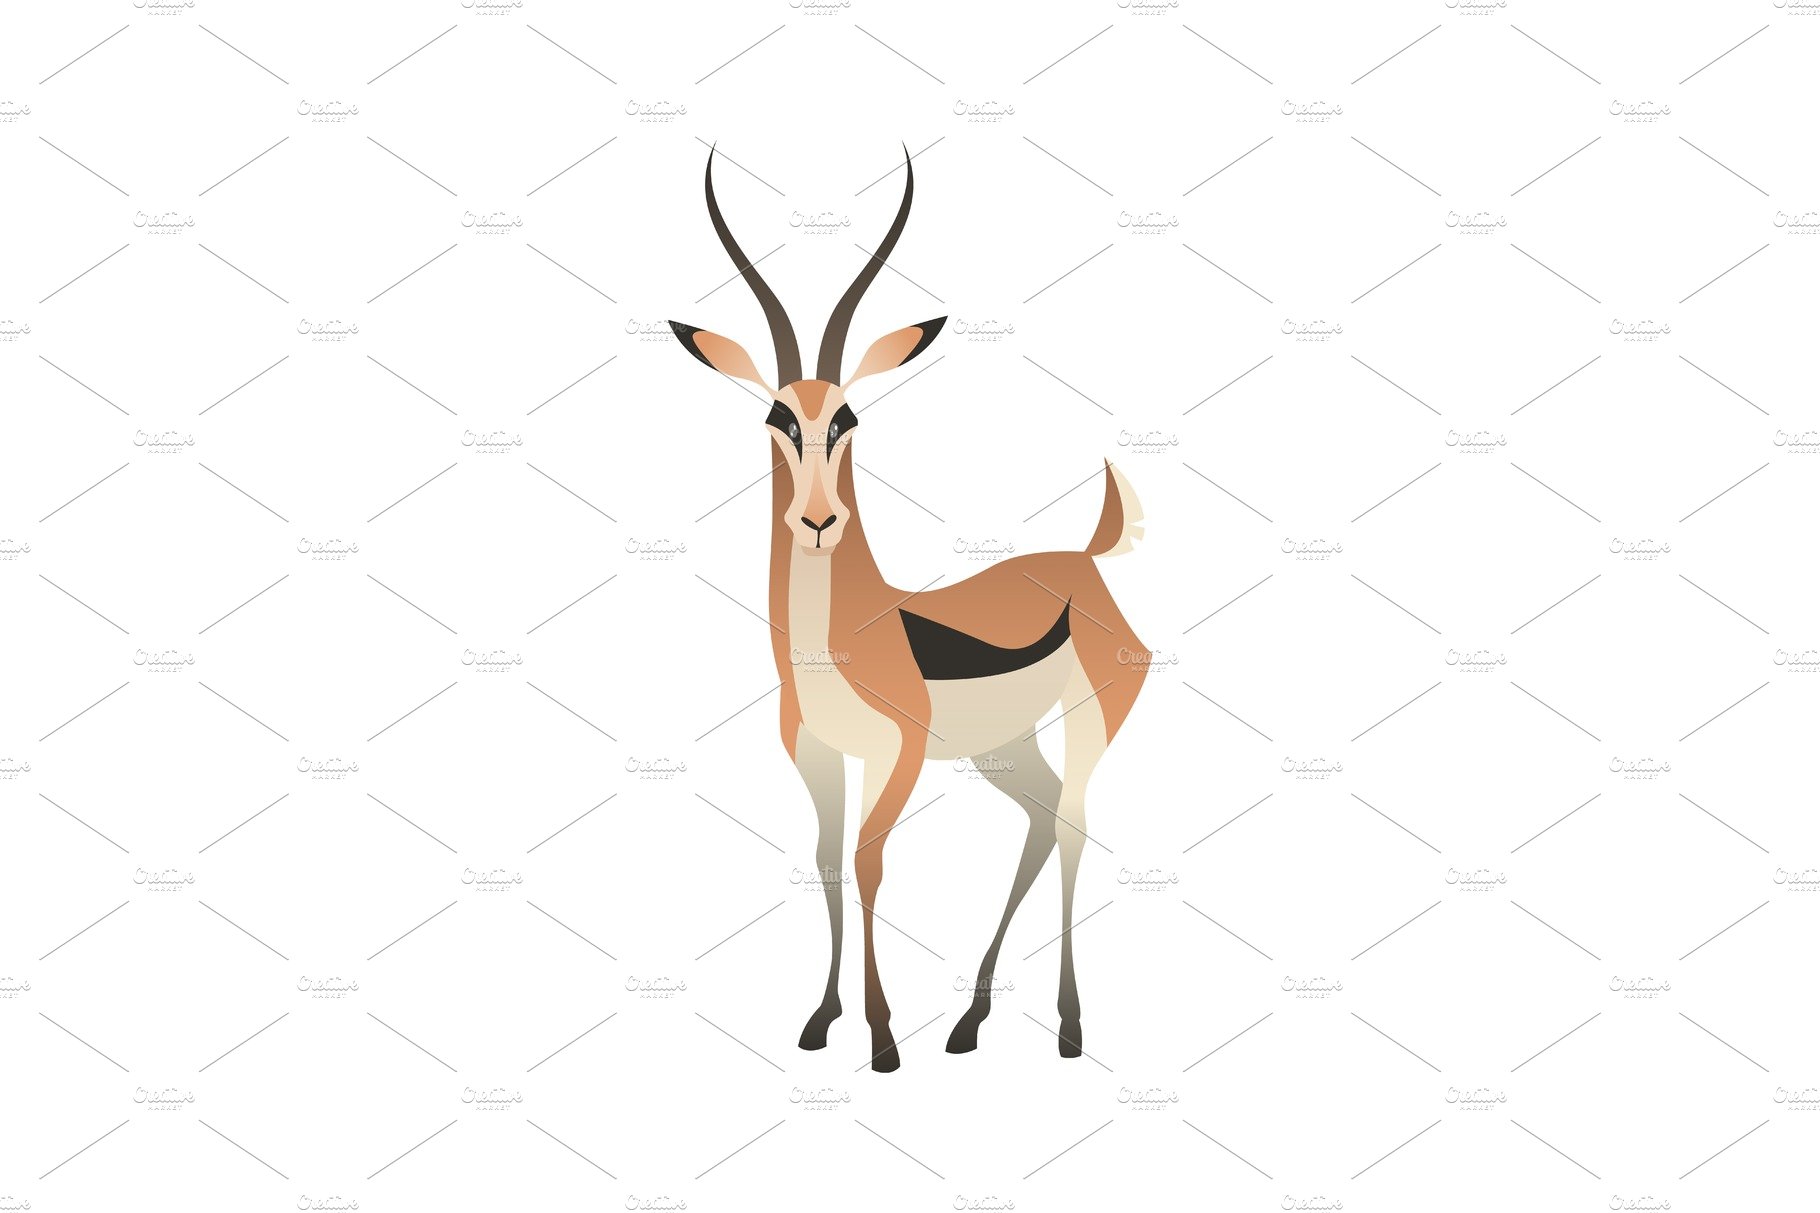 Jungle wild antelope. Gazelle cover image.